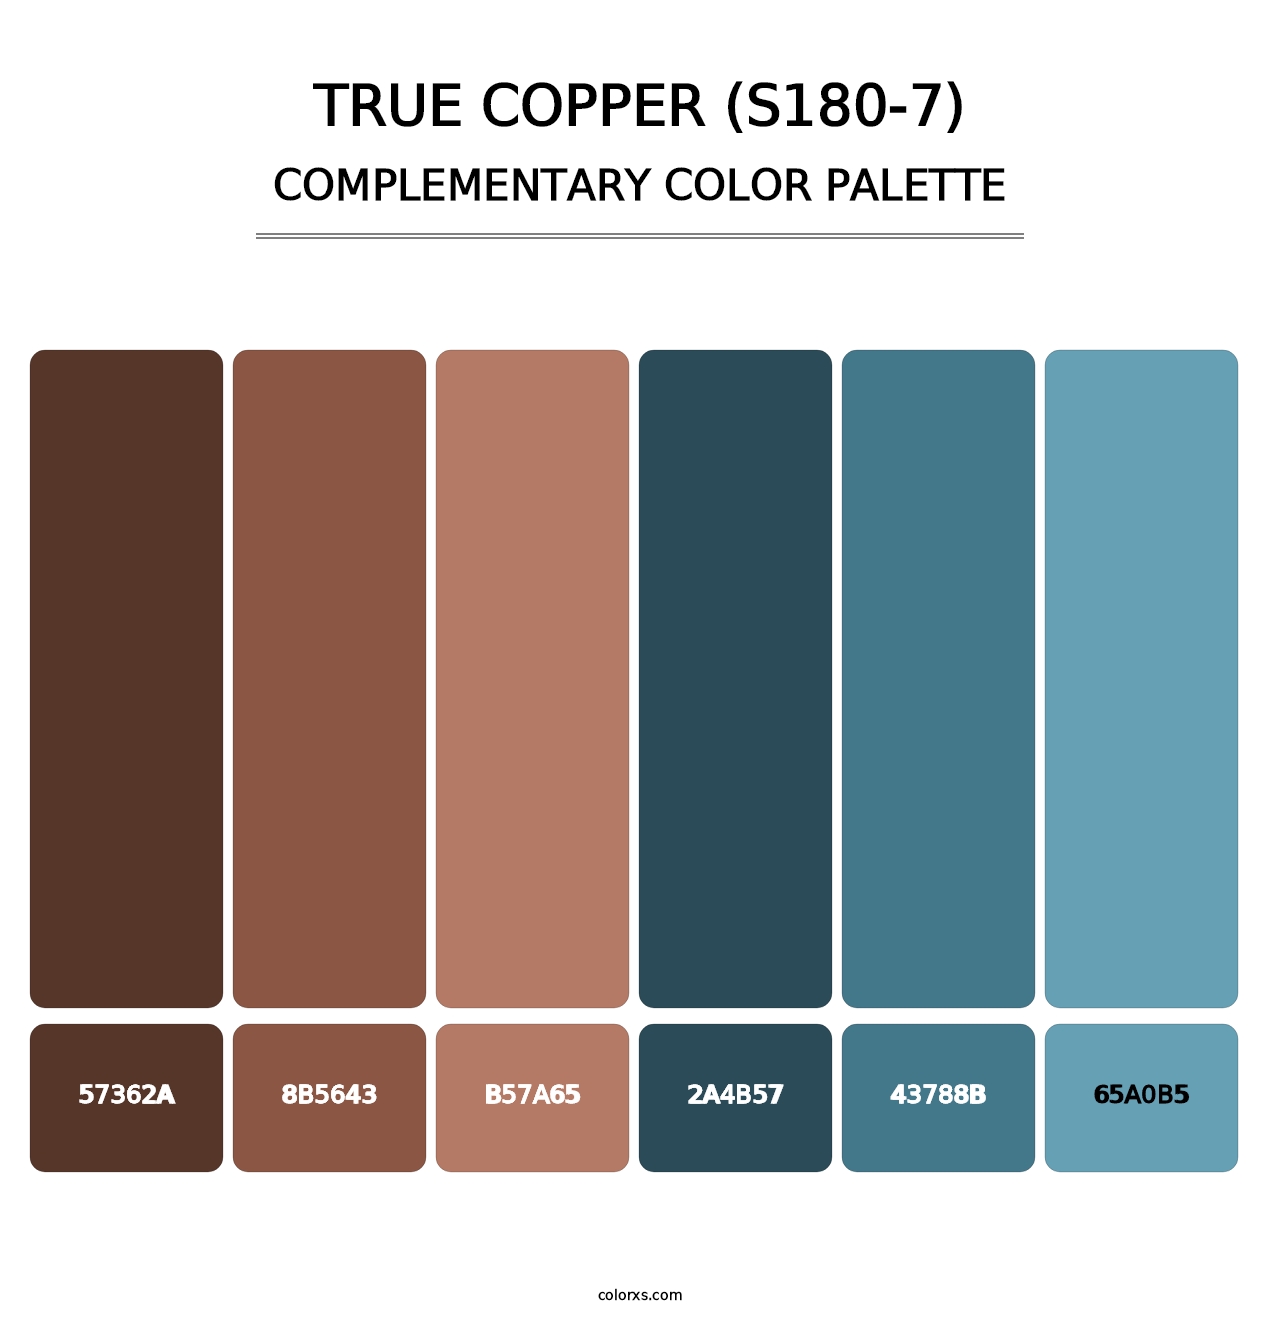 True Copper (S180-7) - Complementary Color Palette